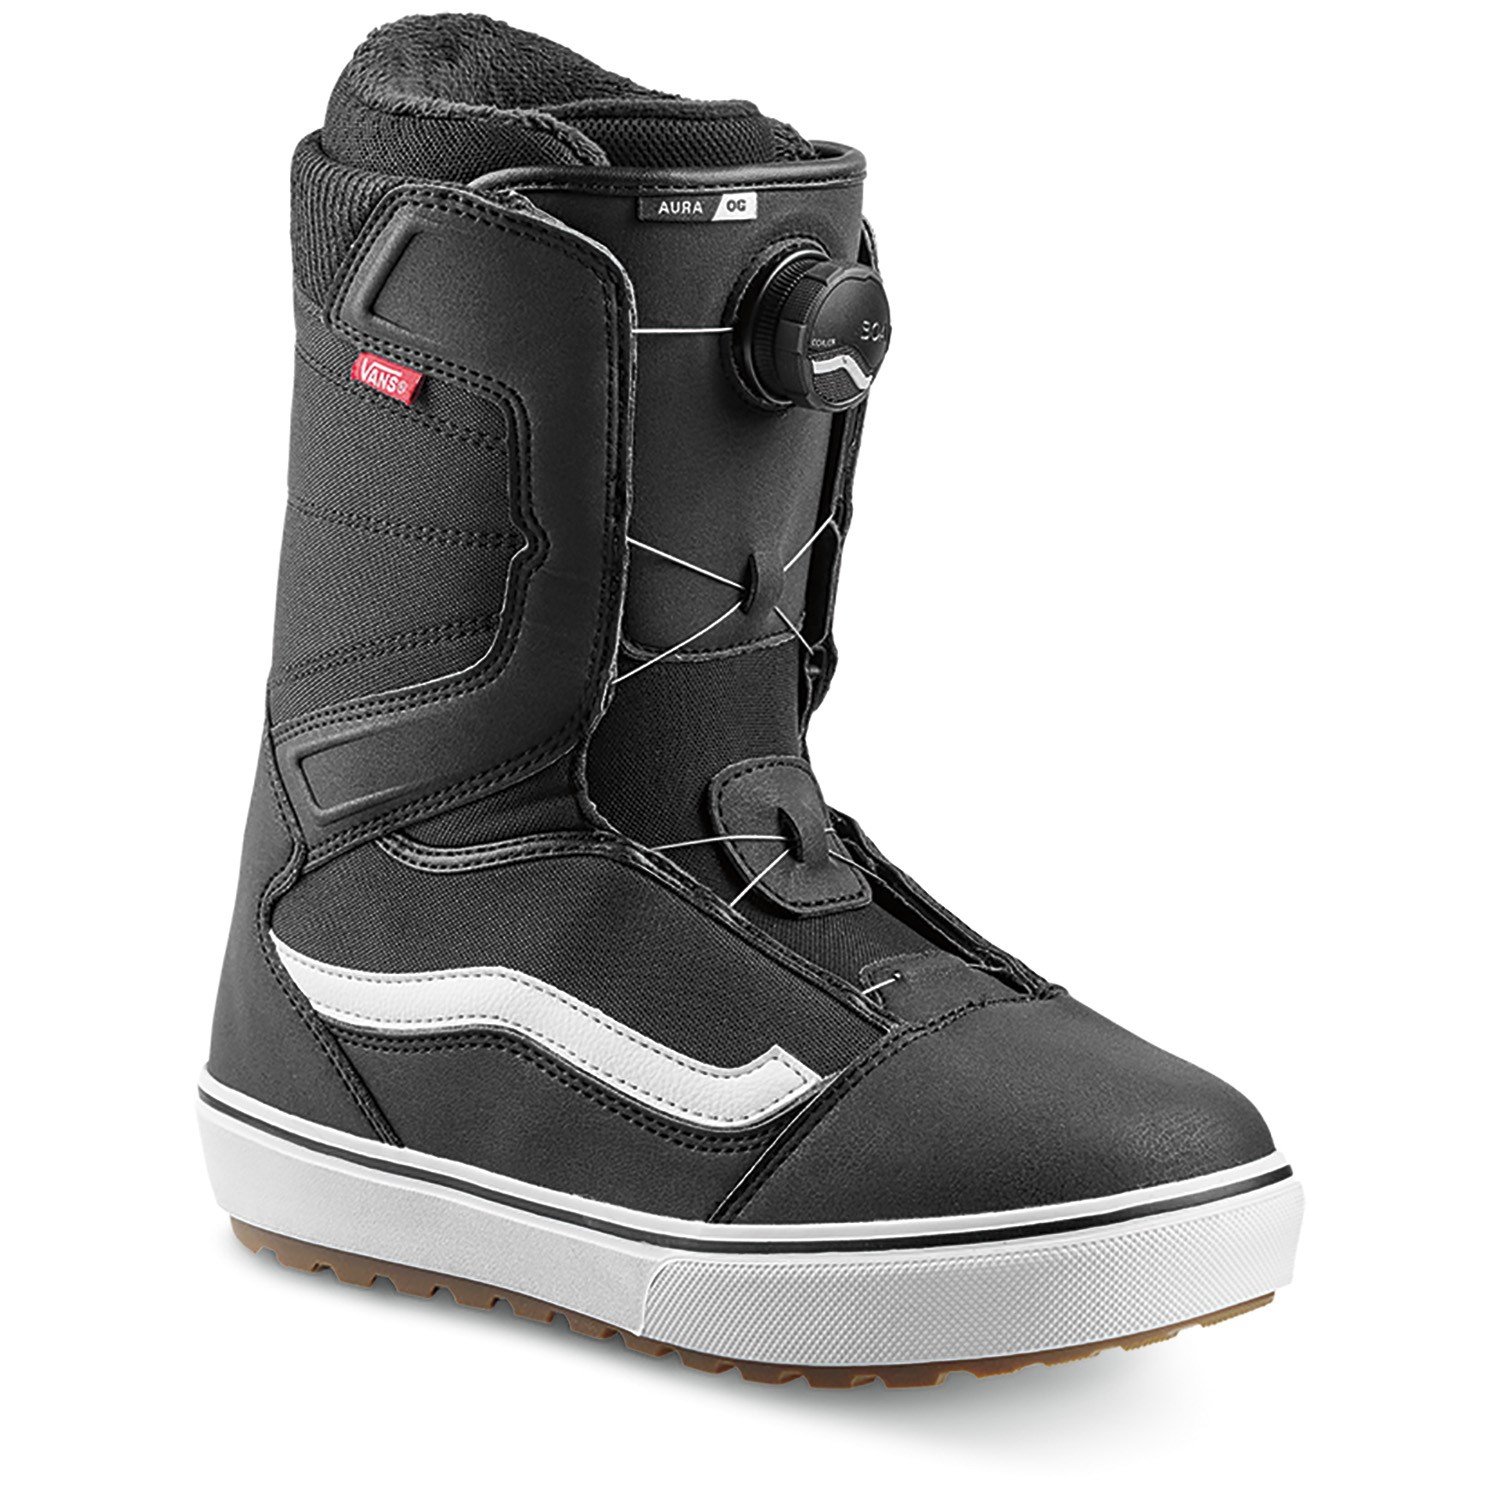 vans snowboard boots size 12